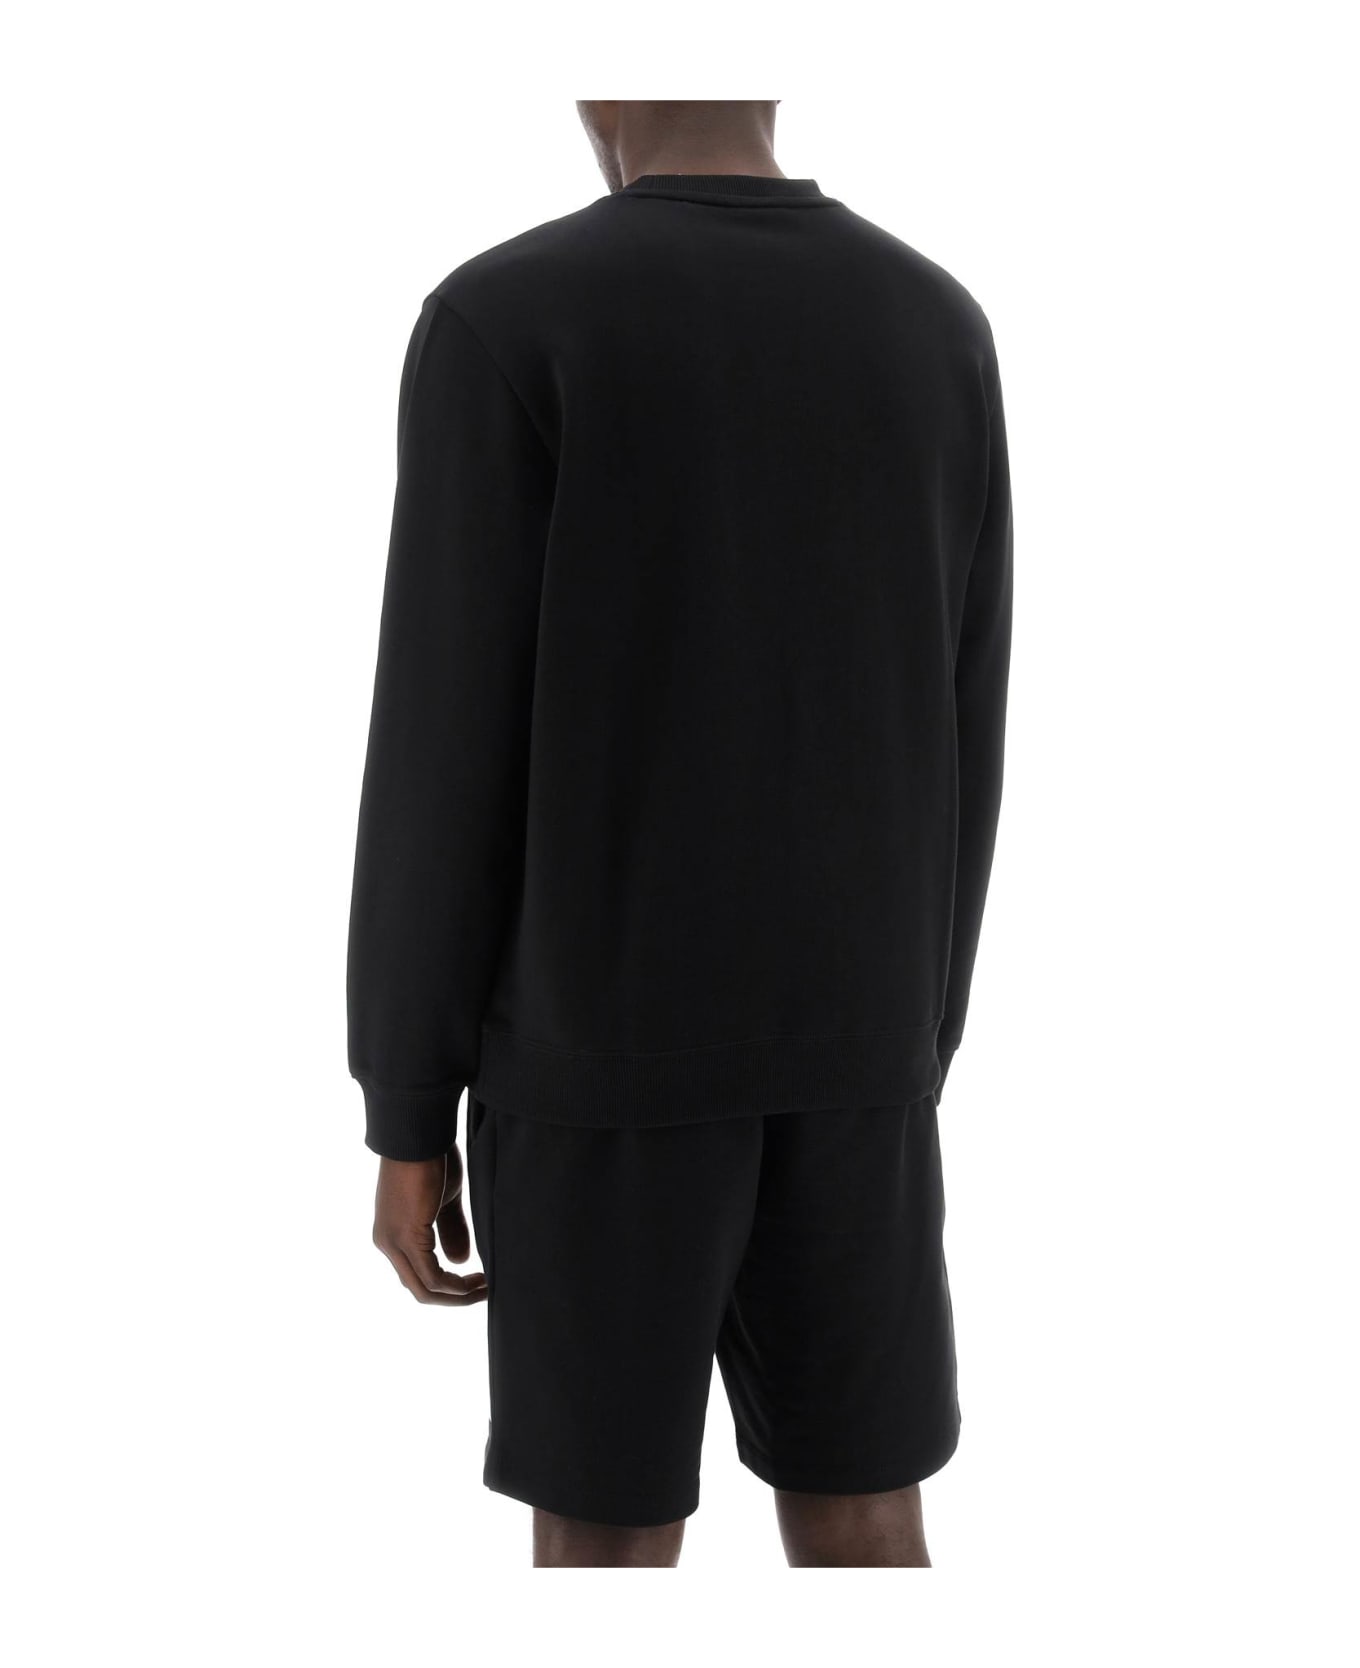 Hugo Boss Diragol Light Sweatshirt - BLACK 009 (Black)